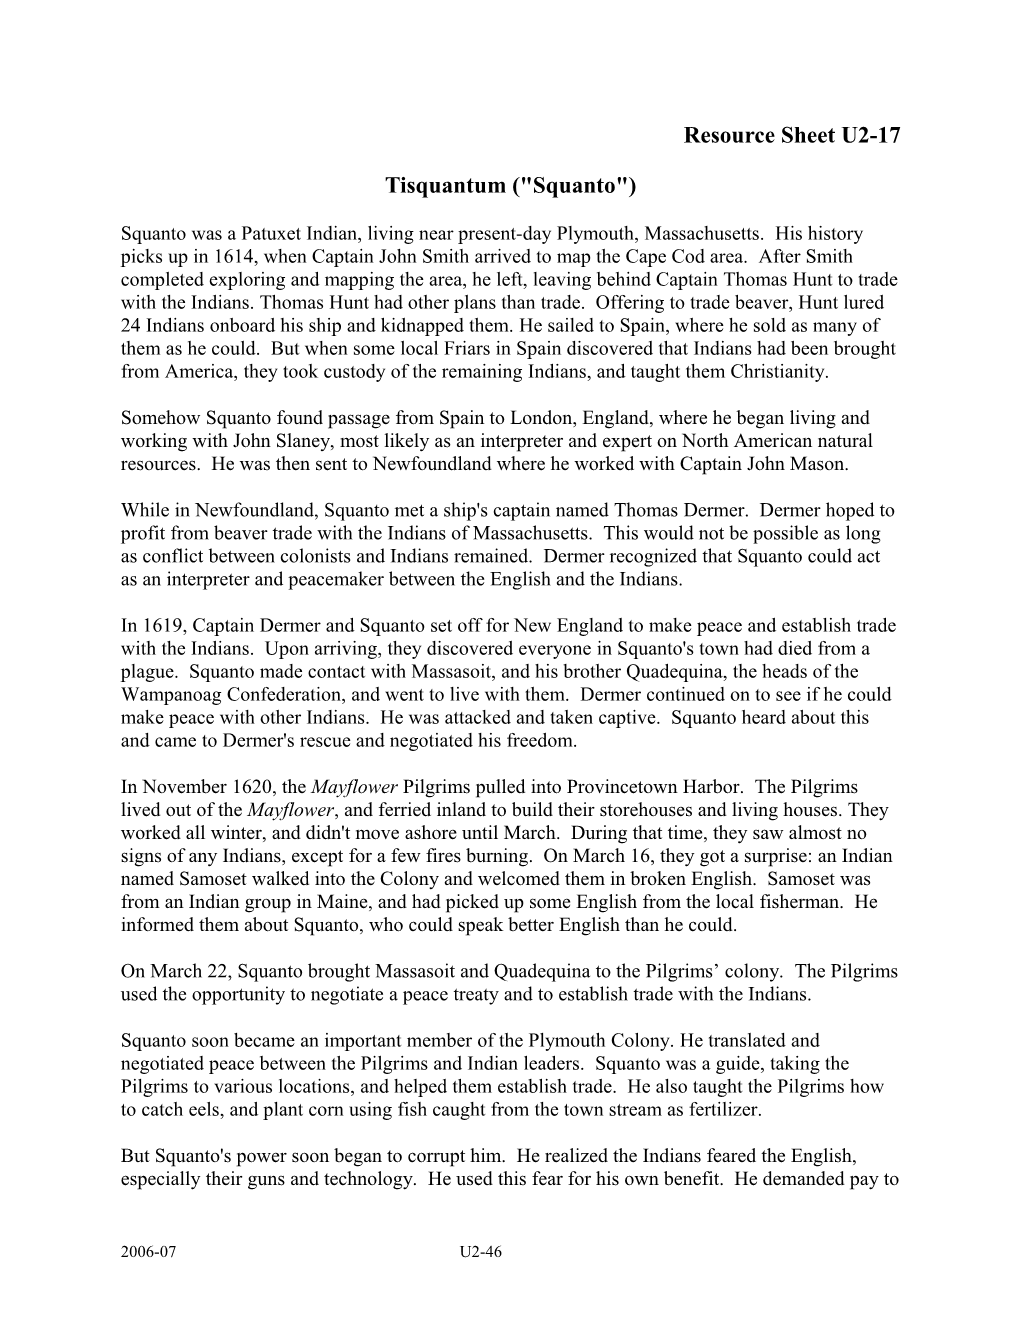 Biography of Tisquantum ( Squanto )